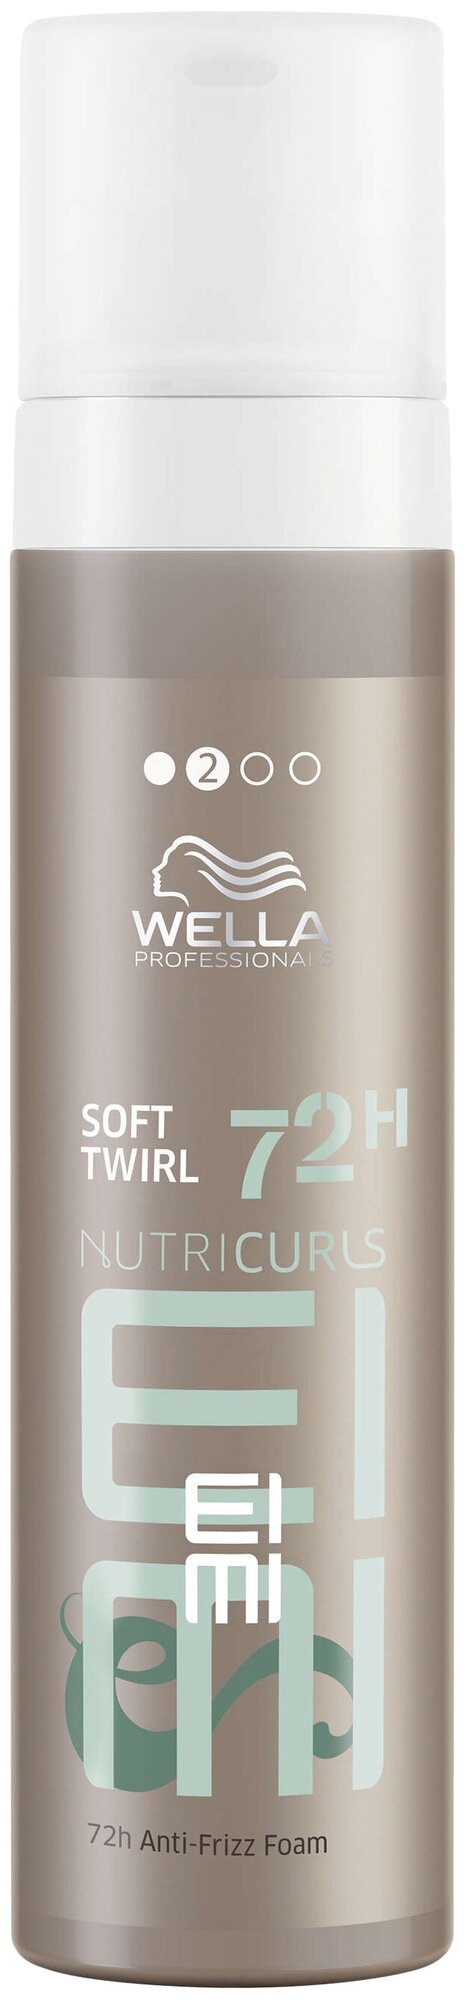 Wella Professionals мусс для волос Nutricurls Eimi Soft Twirl, 200 мл